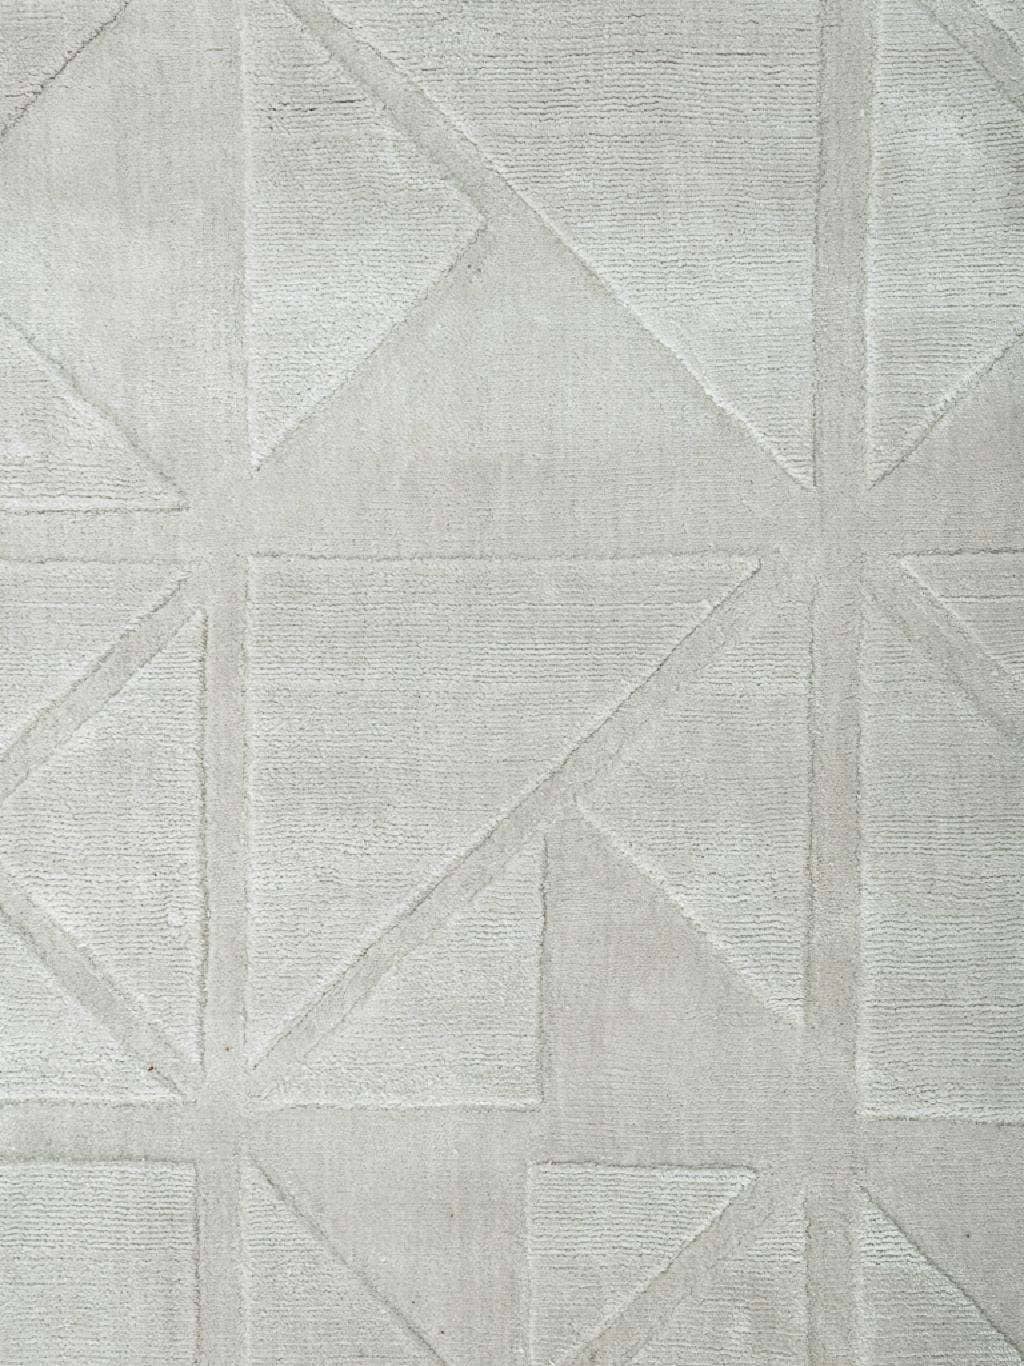 Tapete Indiano Karev Geométrico Vintage Off White 2,50 x 3,50m